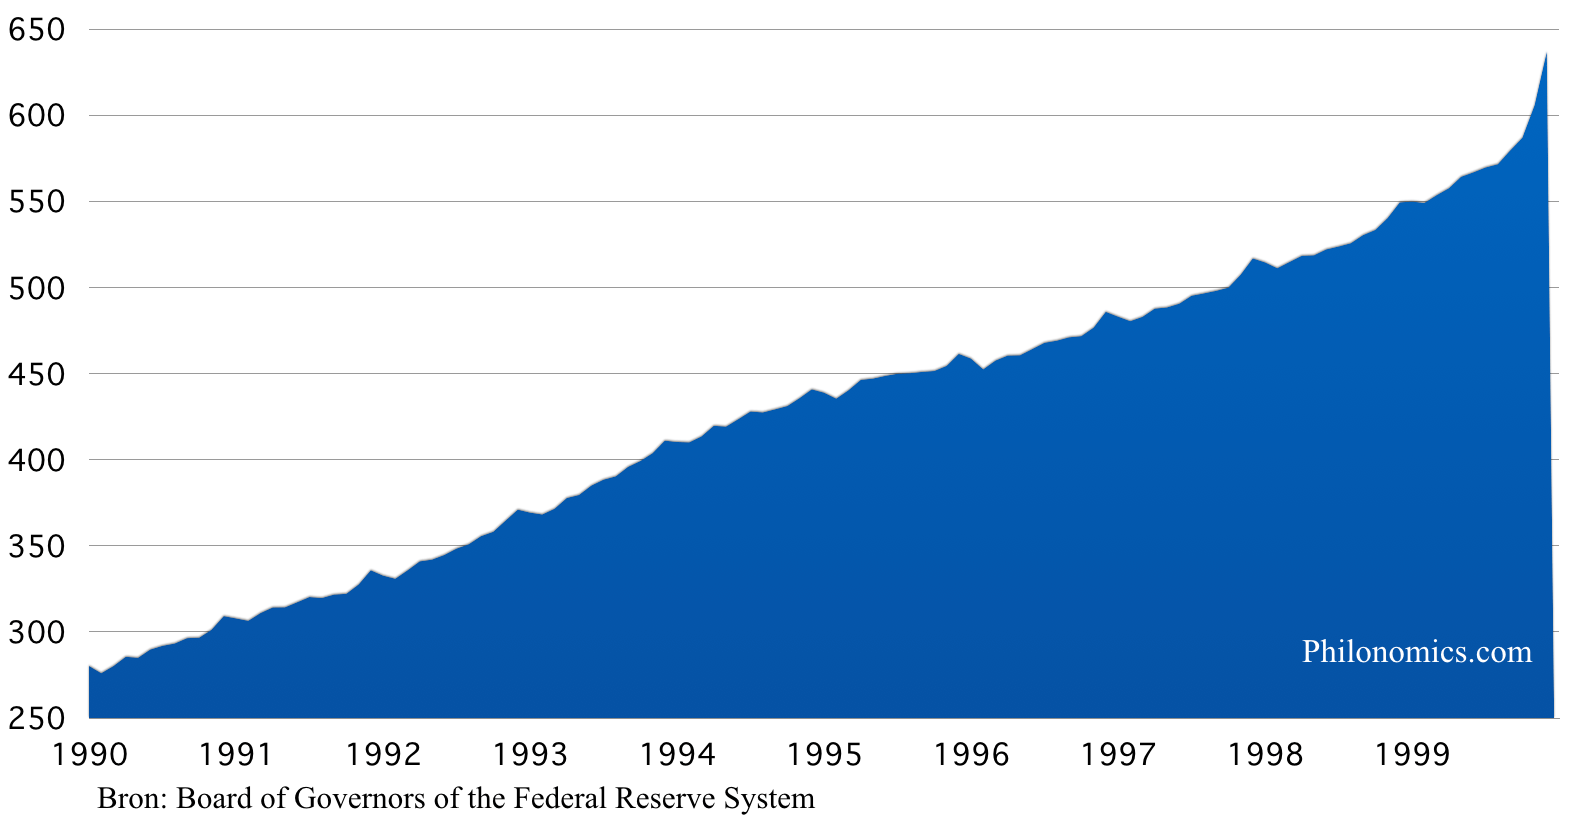 Geldbasis Verenigde Staten (in miljarden $) 1990-2000